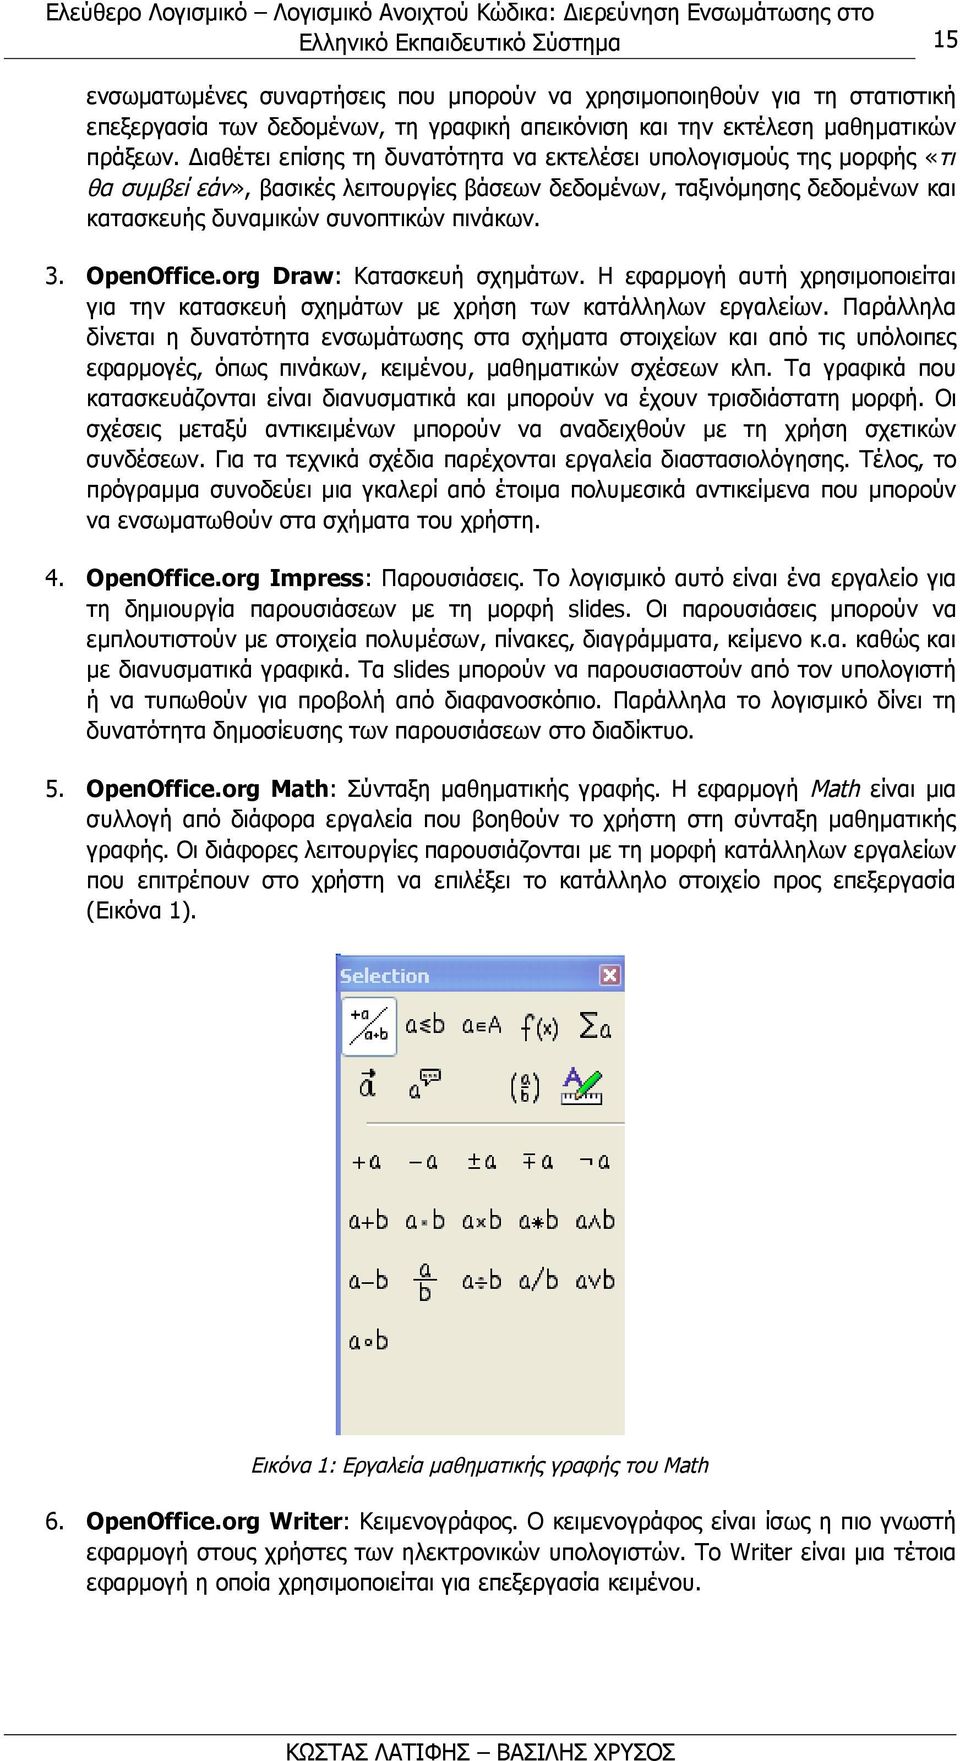 OpenOffice.org Draw: Κατασκευή σχημάτων. Η εφαρμογή αυτή χρησιμοποιείται για την κατασκευή σχημάτων με χρήση των κατάλληλων εργαλείων.